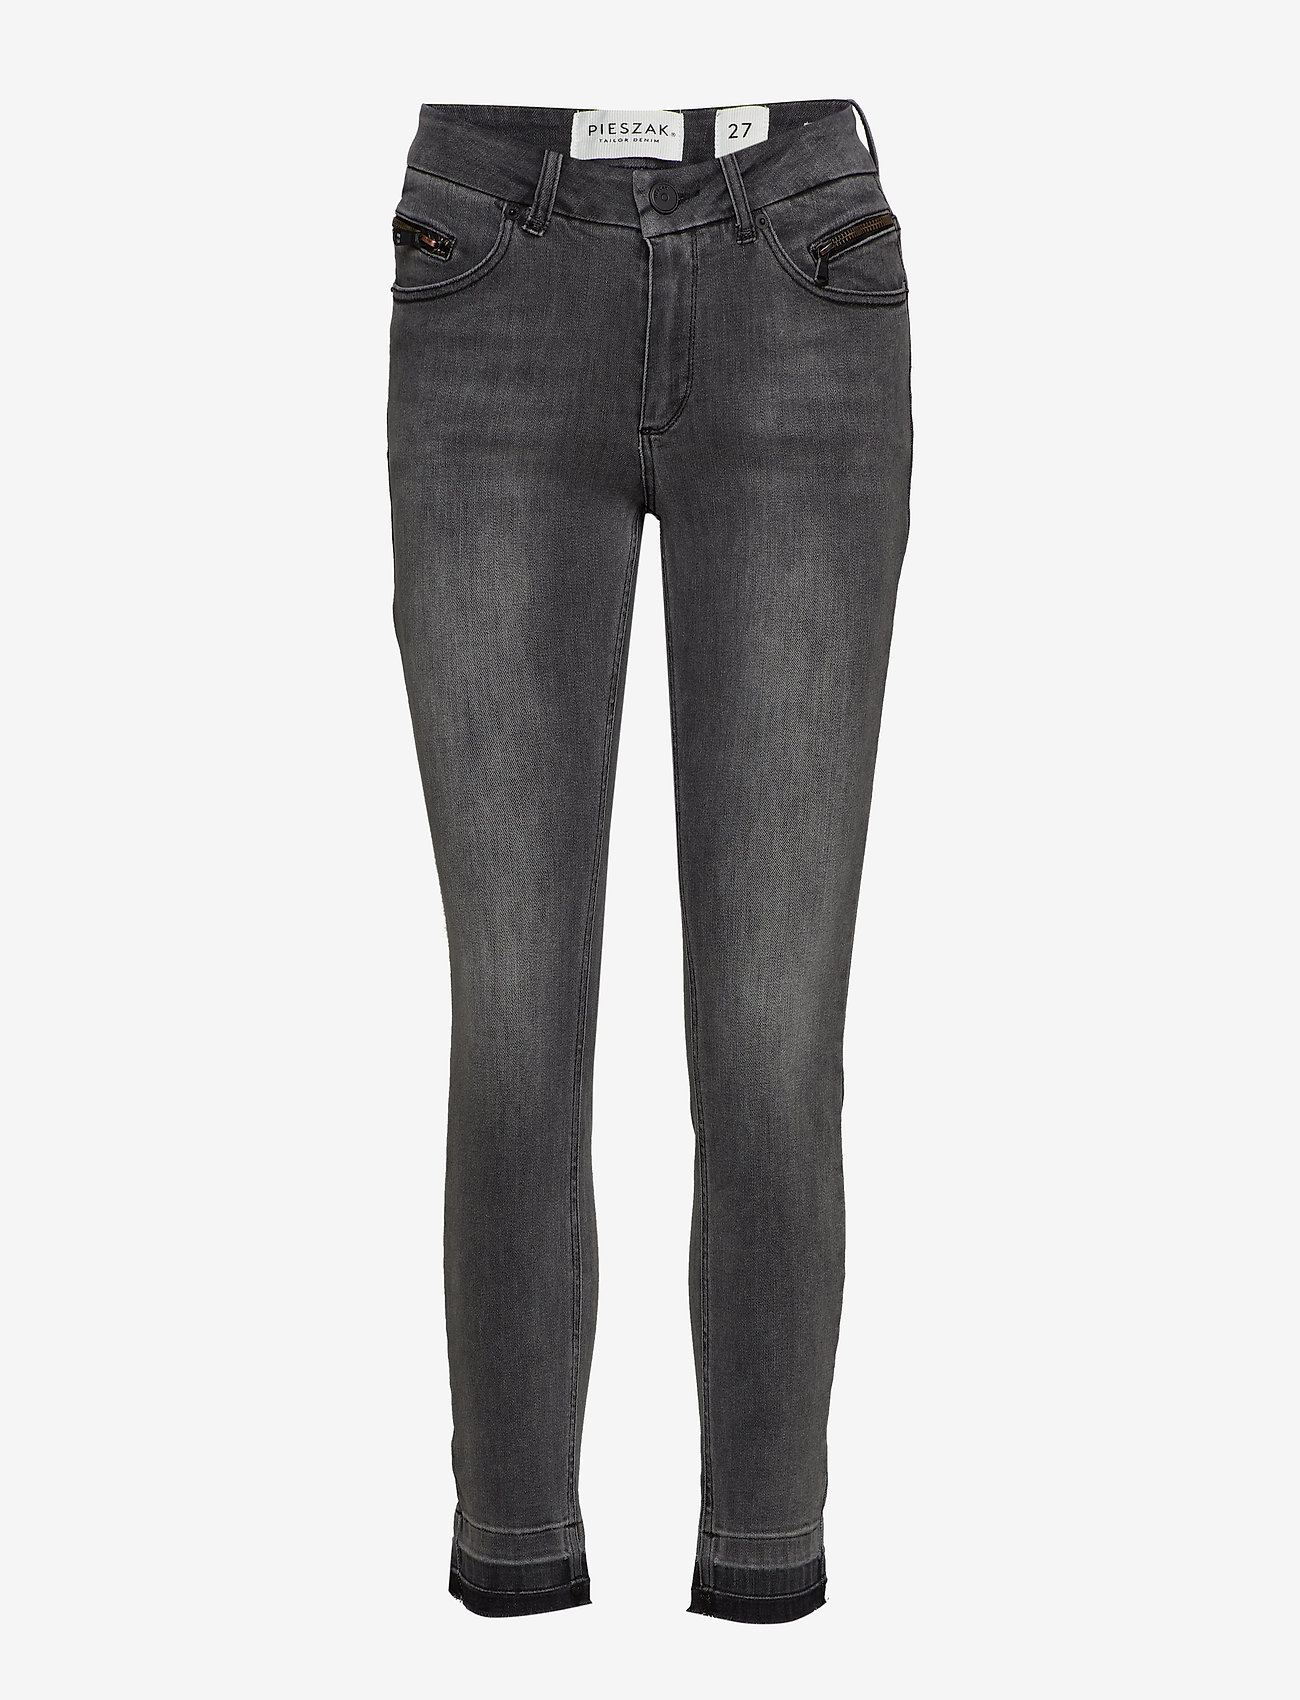 Pieszak - Naomi cropped Georgetown black - skinny jeans - denim blue - 0